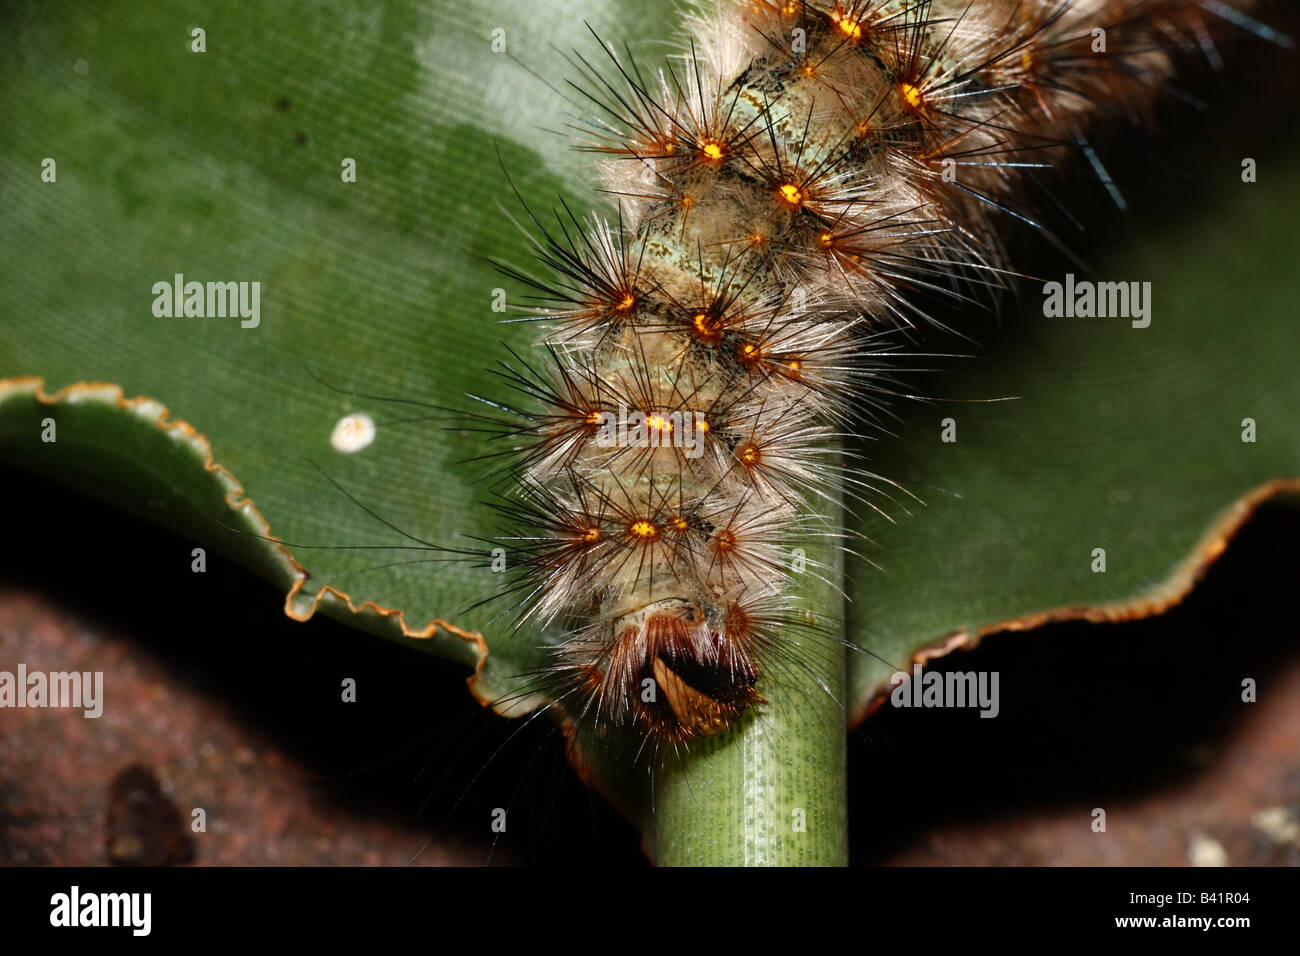 Caterpillar on Bird's of Paradise's Leave Stock Photo